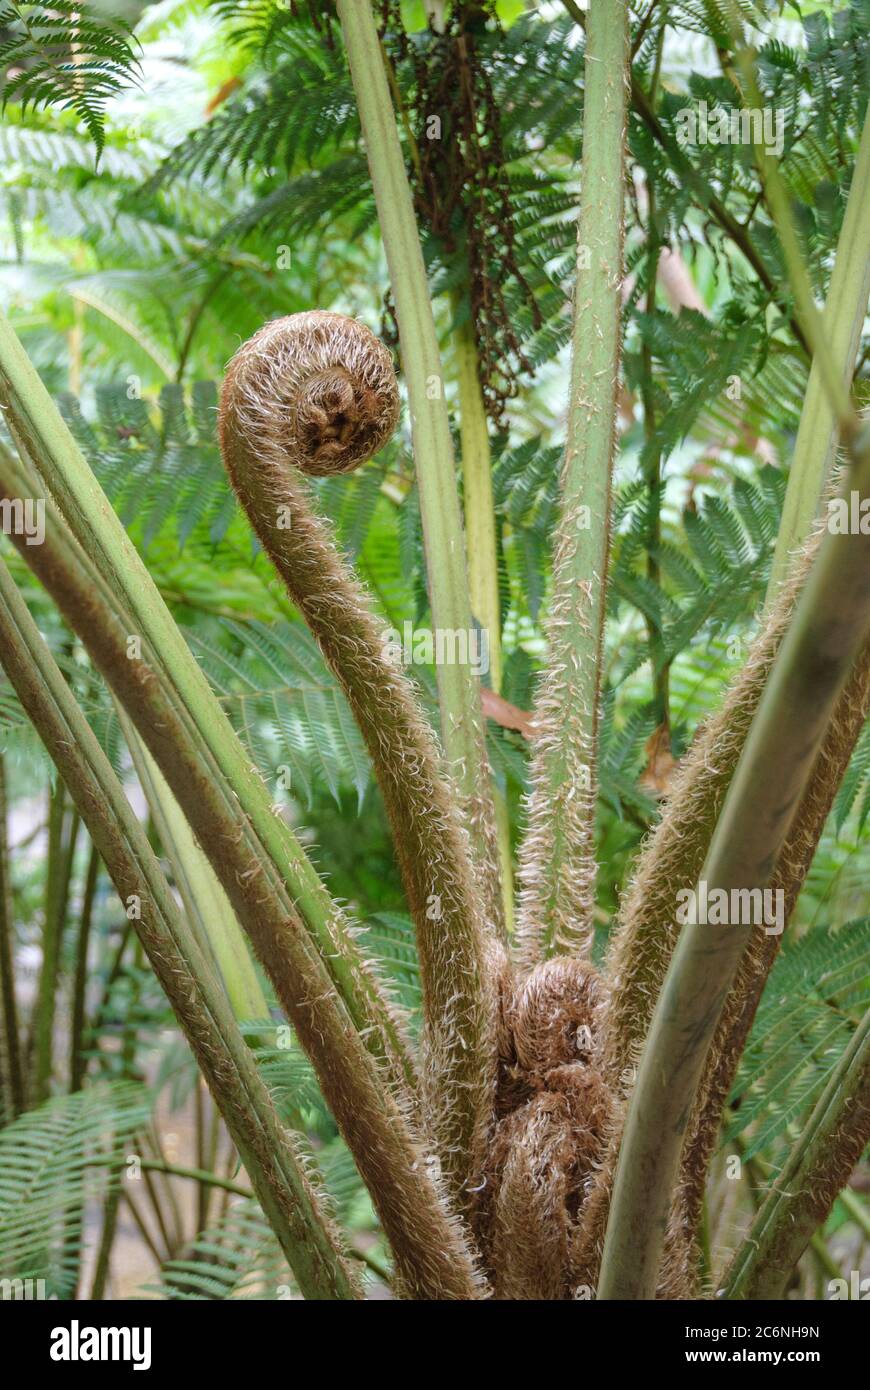 Schuppen-Baumfarn Cyathea cooperi, Dandruff tree fern Cyathea cooperi Stock Photo